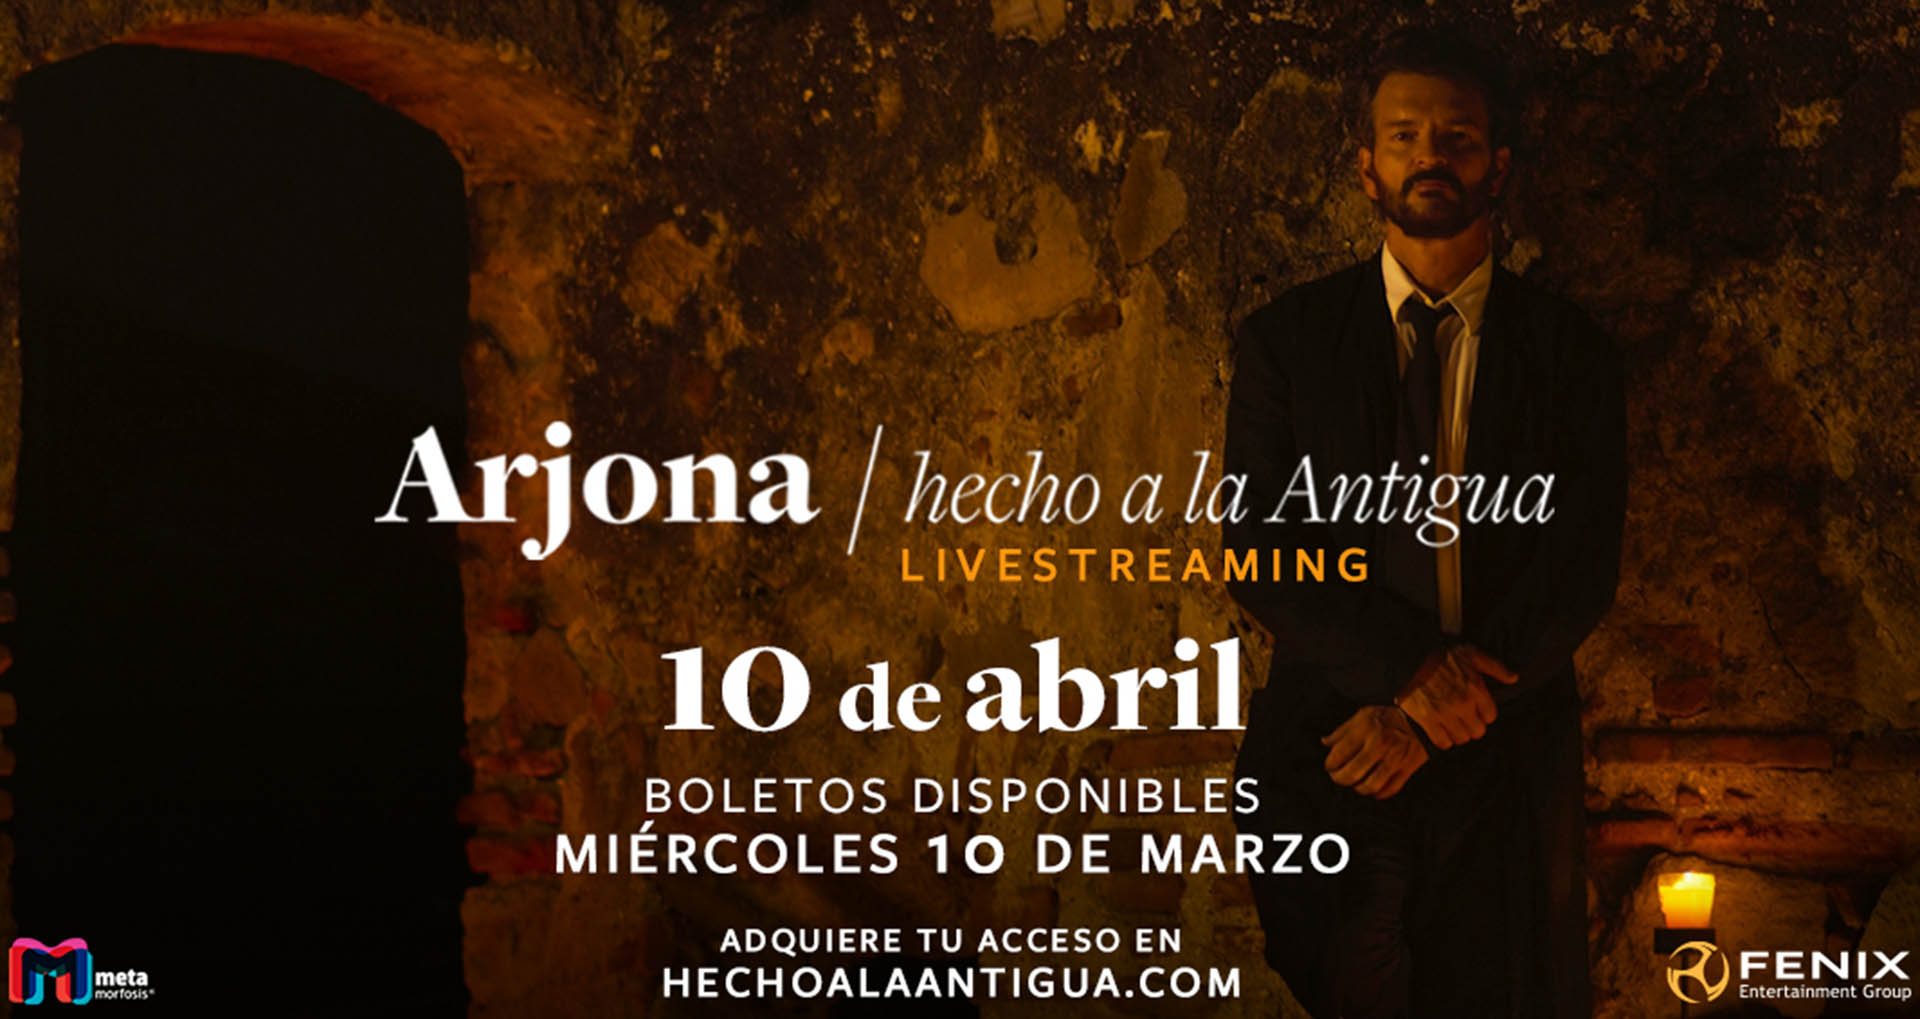 Ricardo Arjona hará un show por streaming nunca antes visto: contará con más de 30 músicos iluminados solo por velas - Infobae